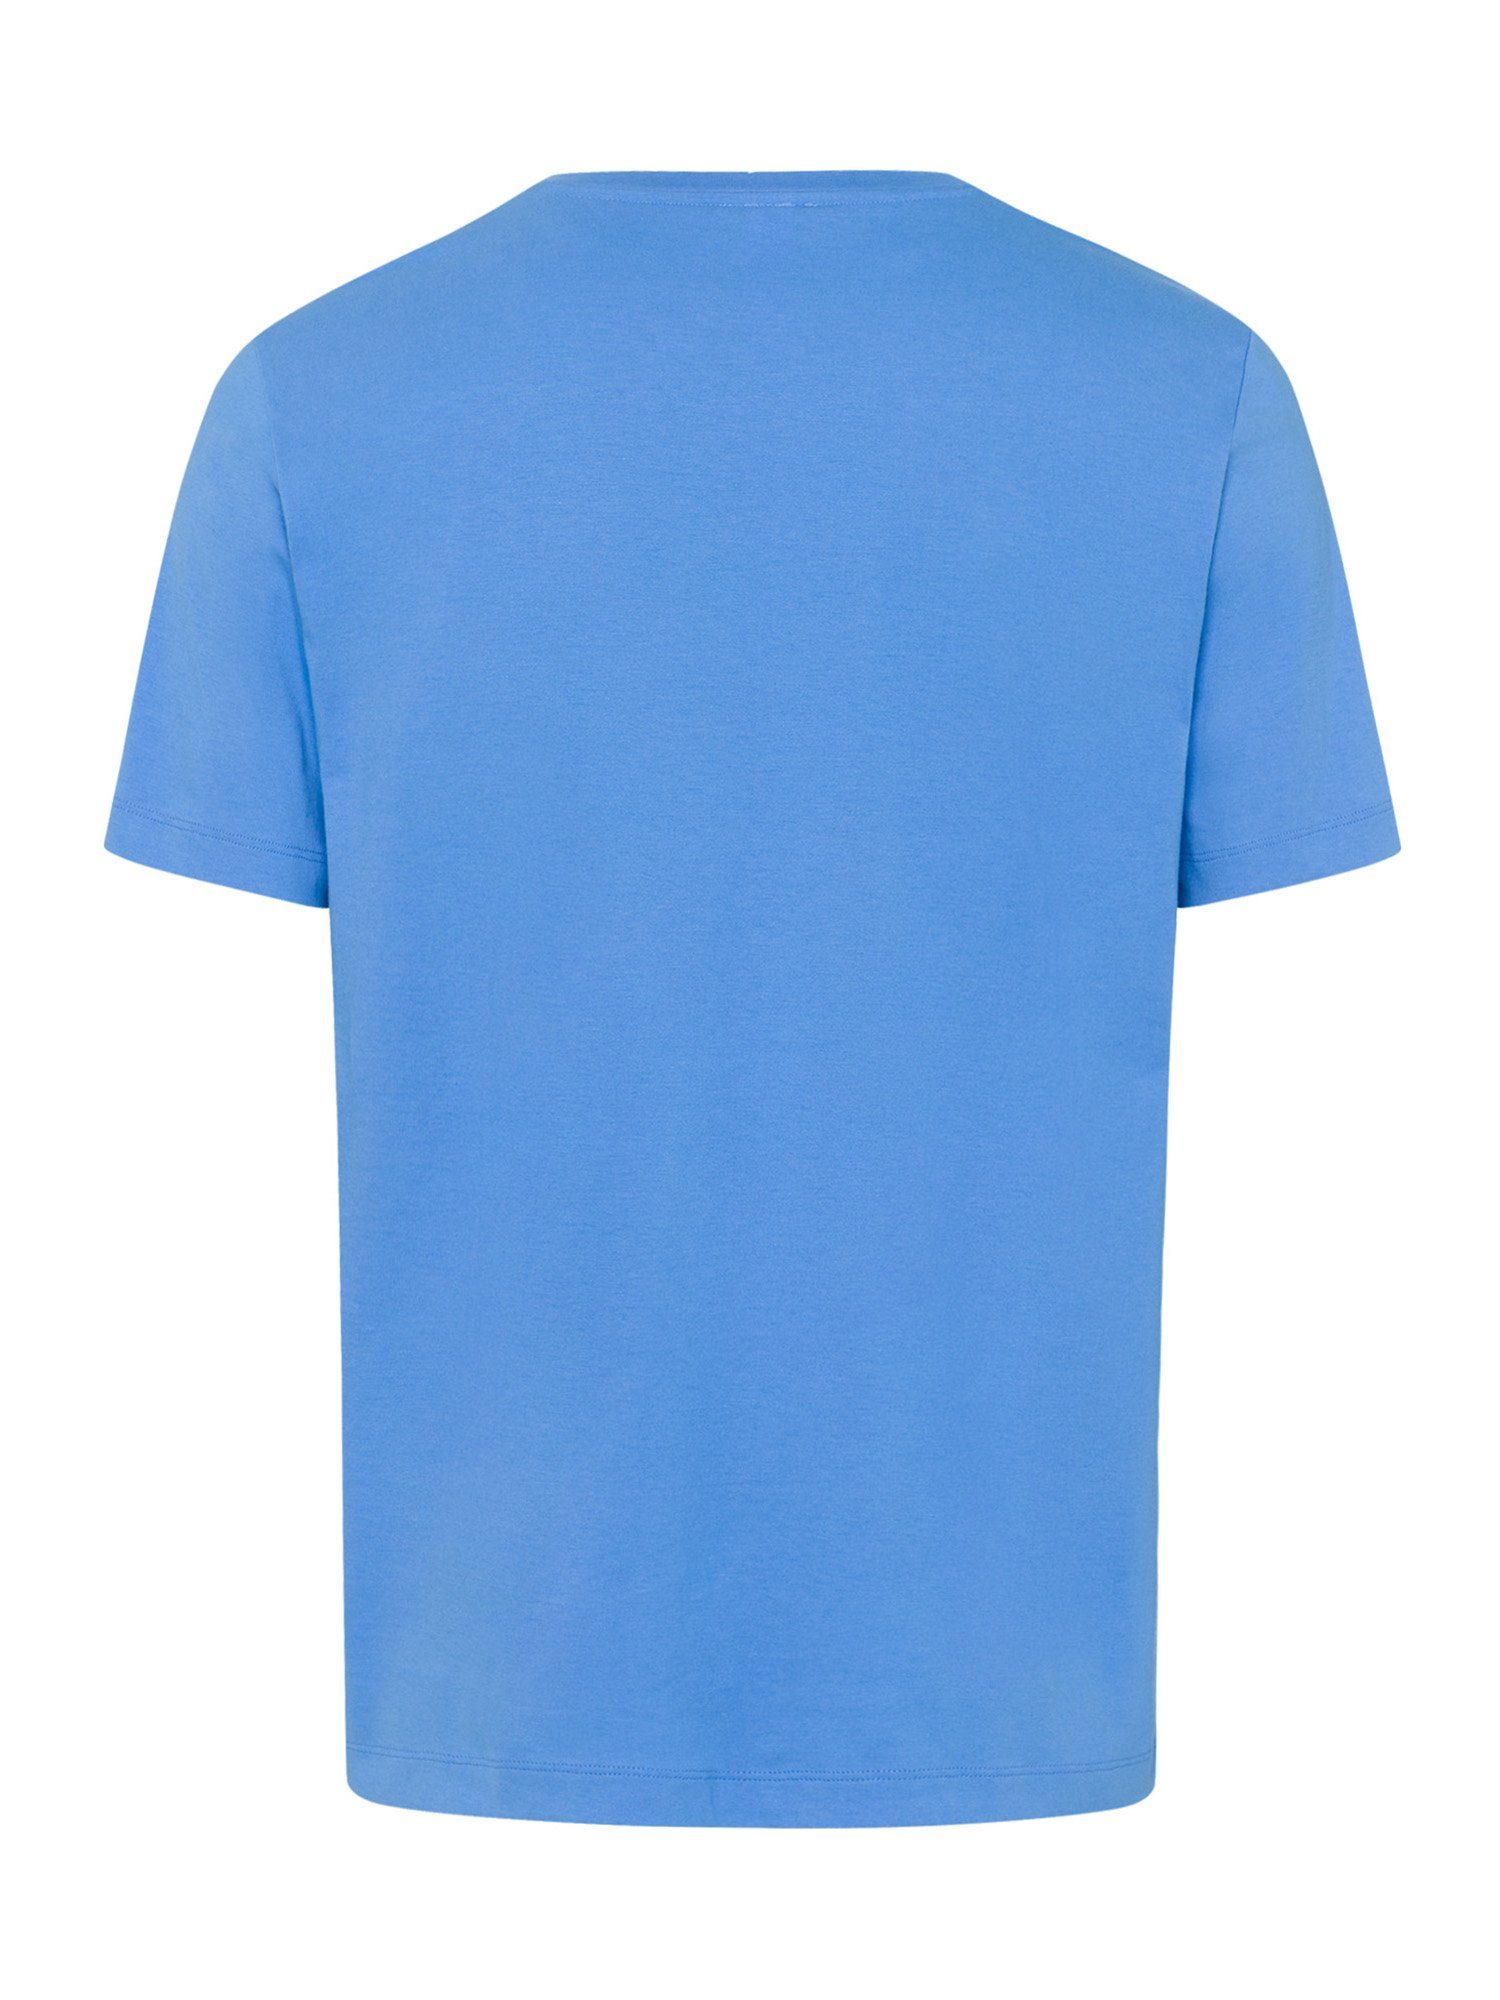 Hanro sailing Living Shirts blue T-Shirt